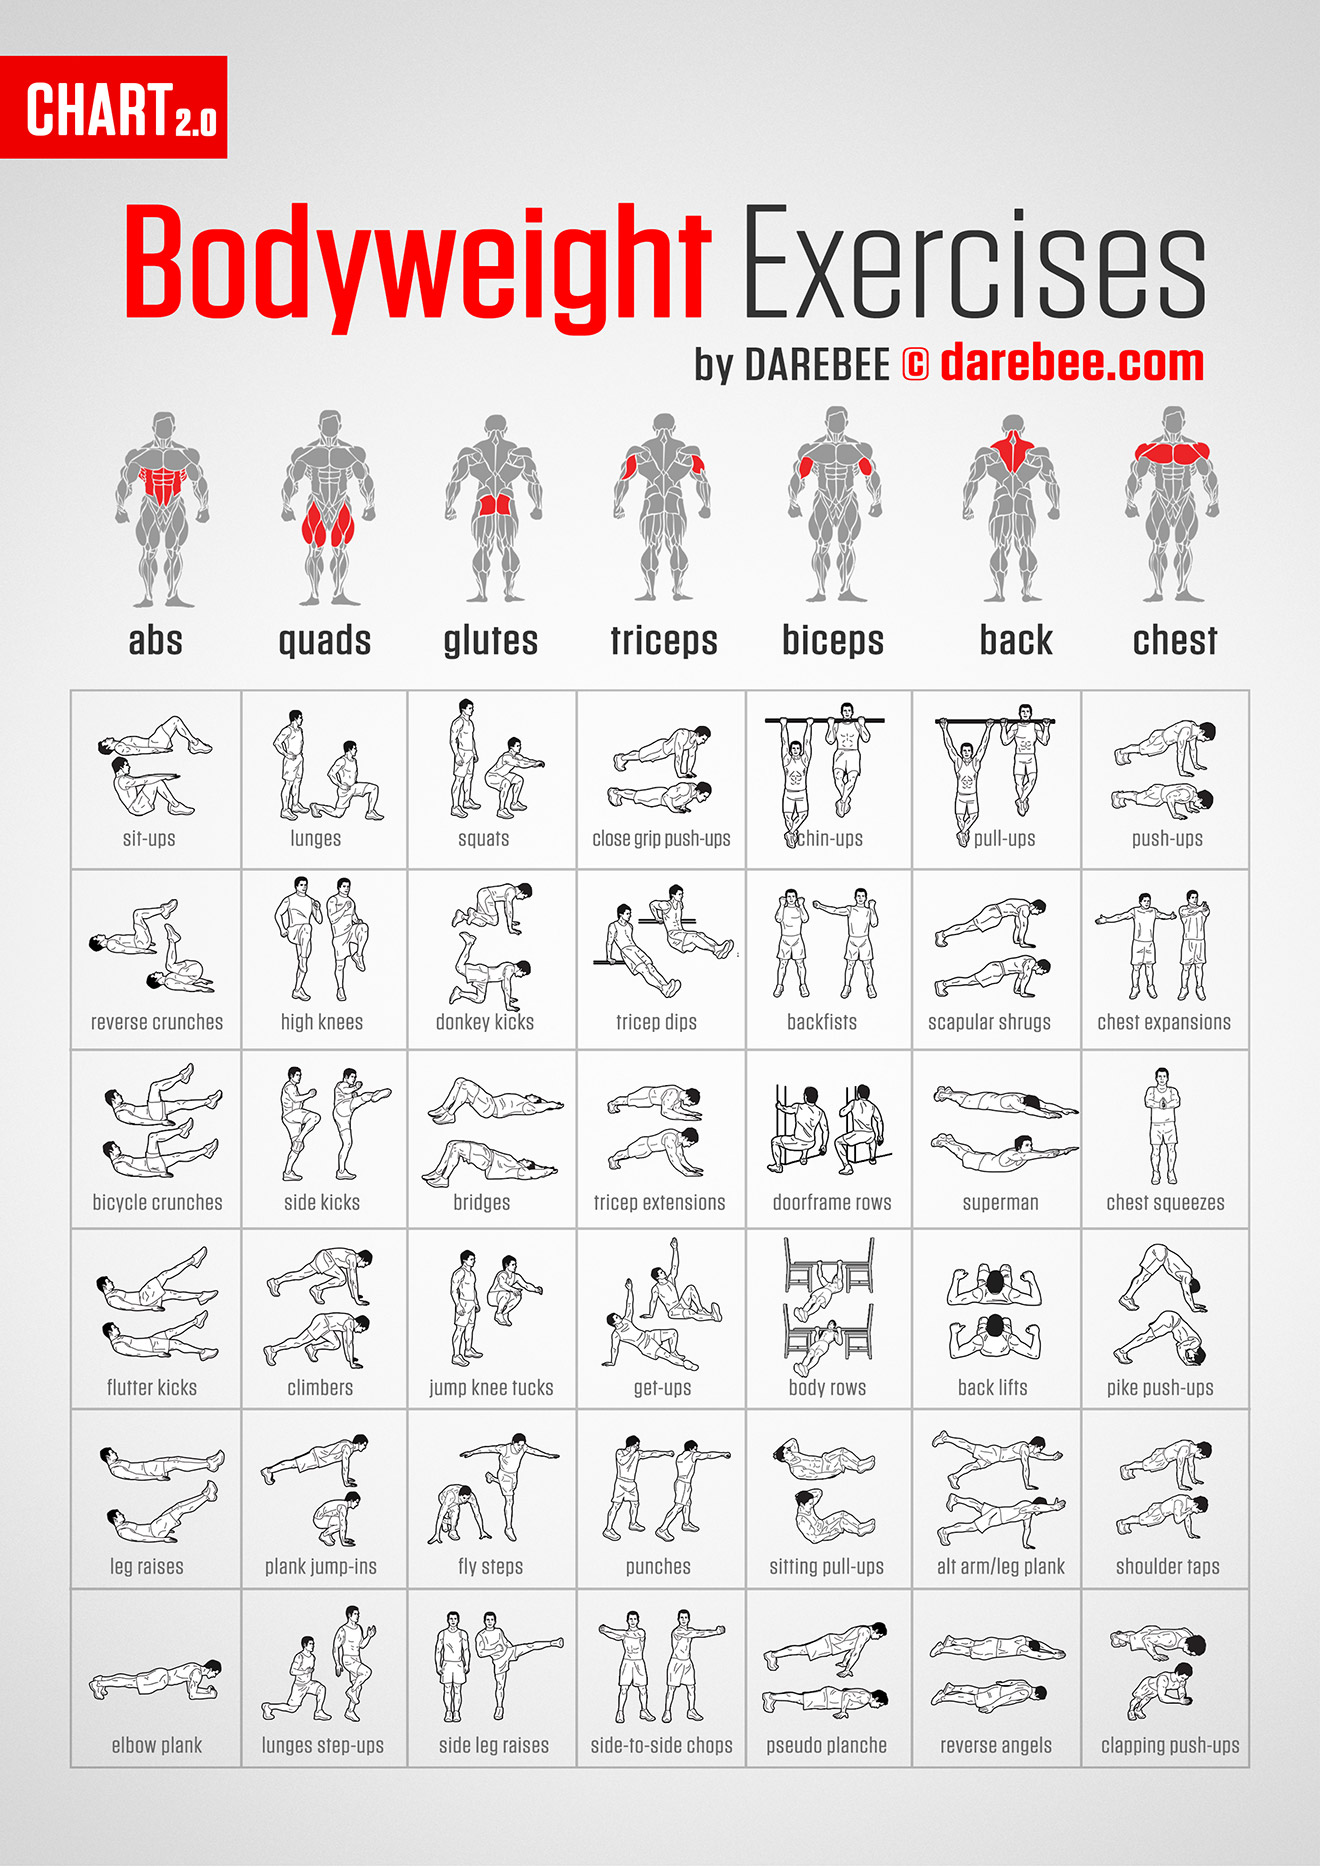 I. Introduction to Bodyweight Exercises